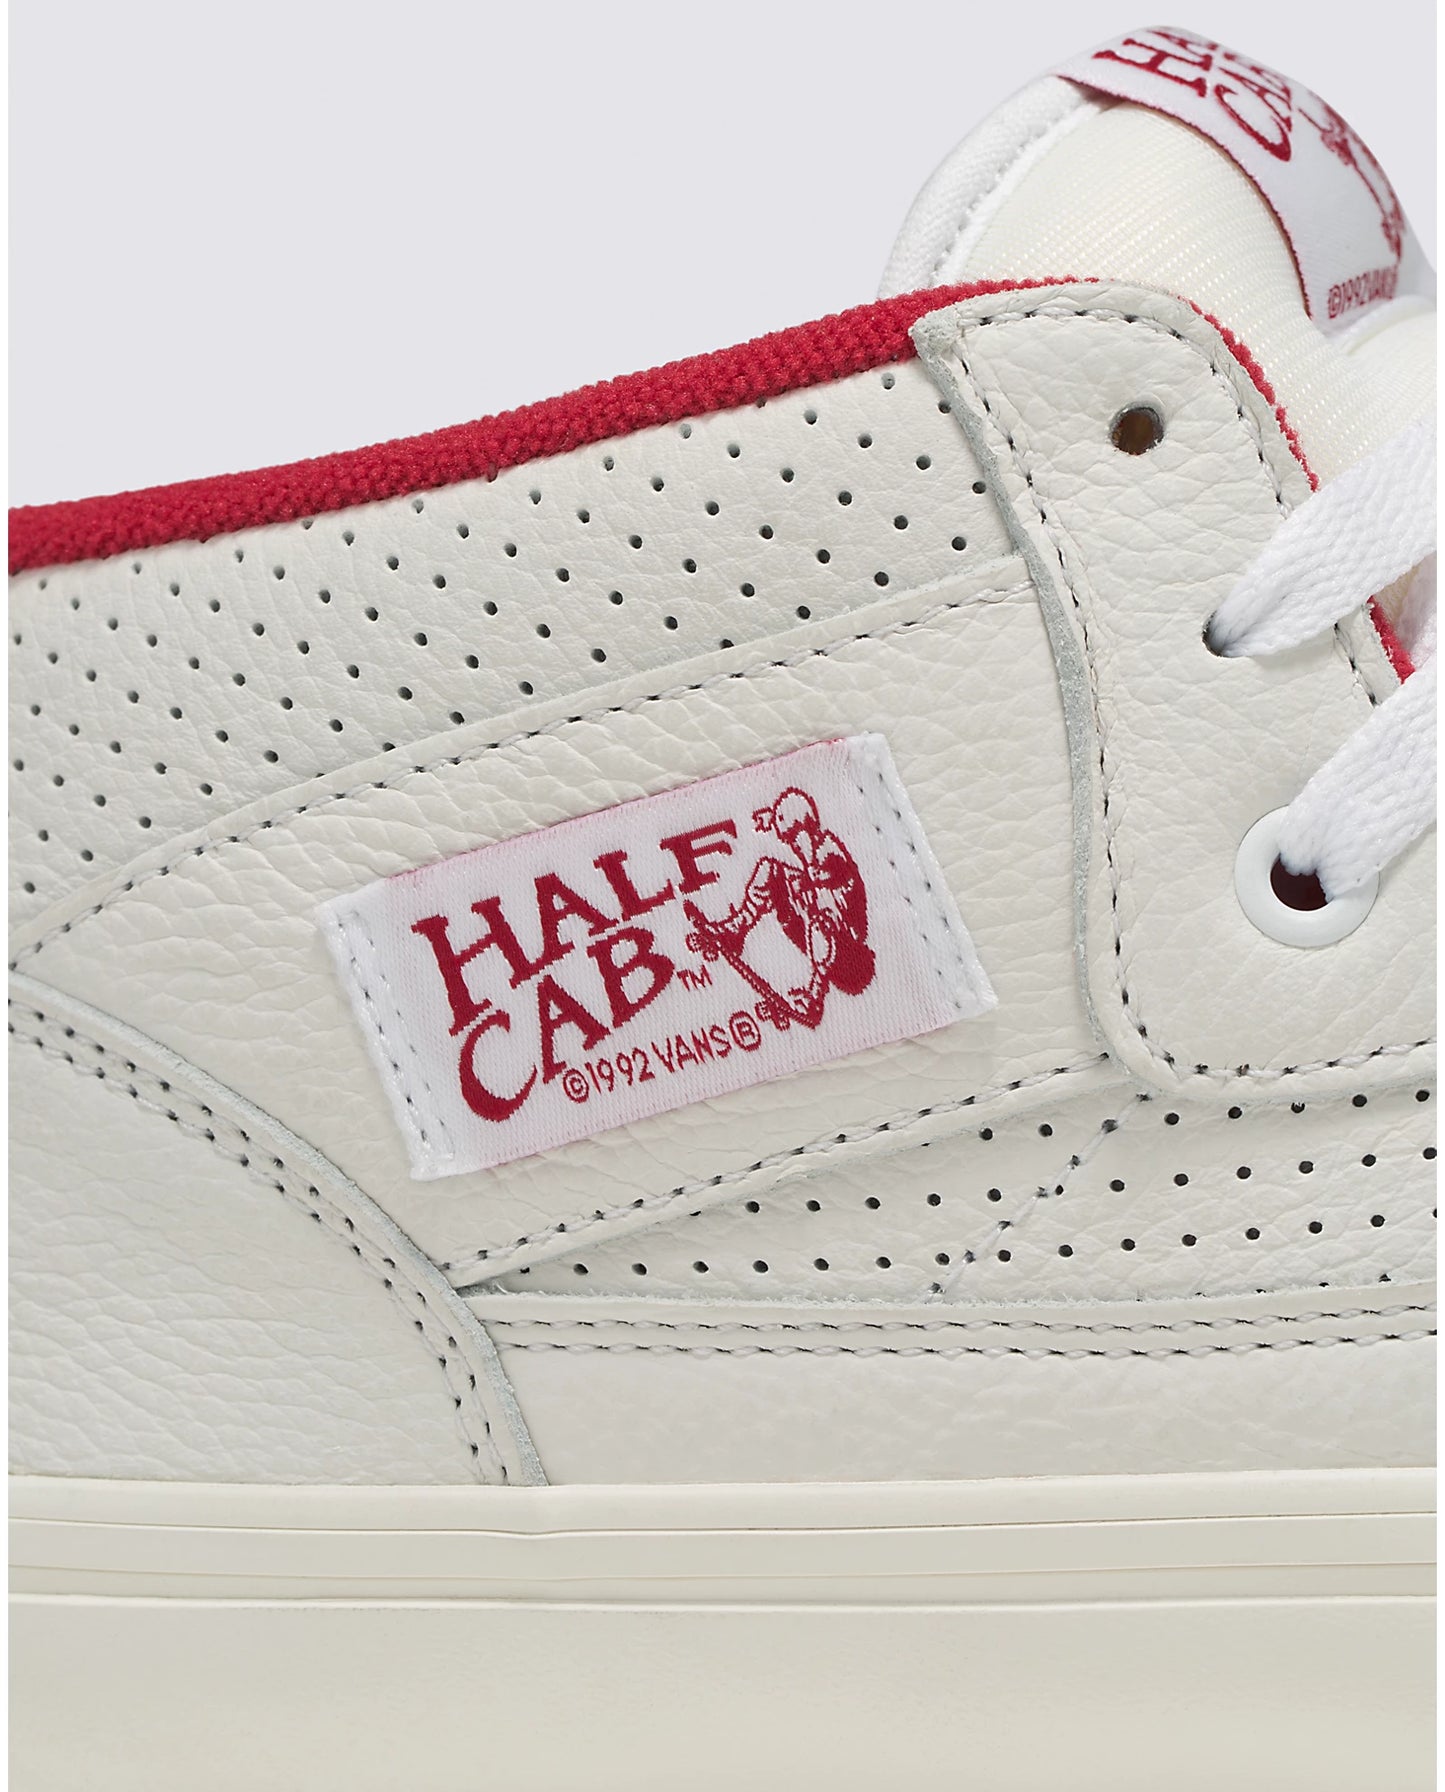 Skate Half Cab Steve Caballero Pro Shoe Vin. Spt. Wht/Red(size options listed)